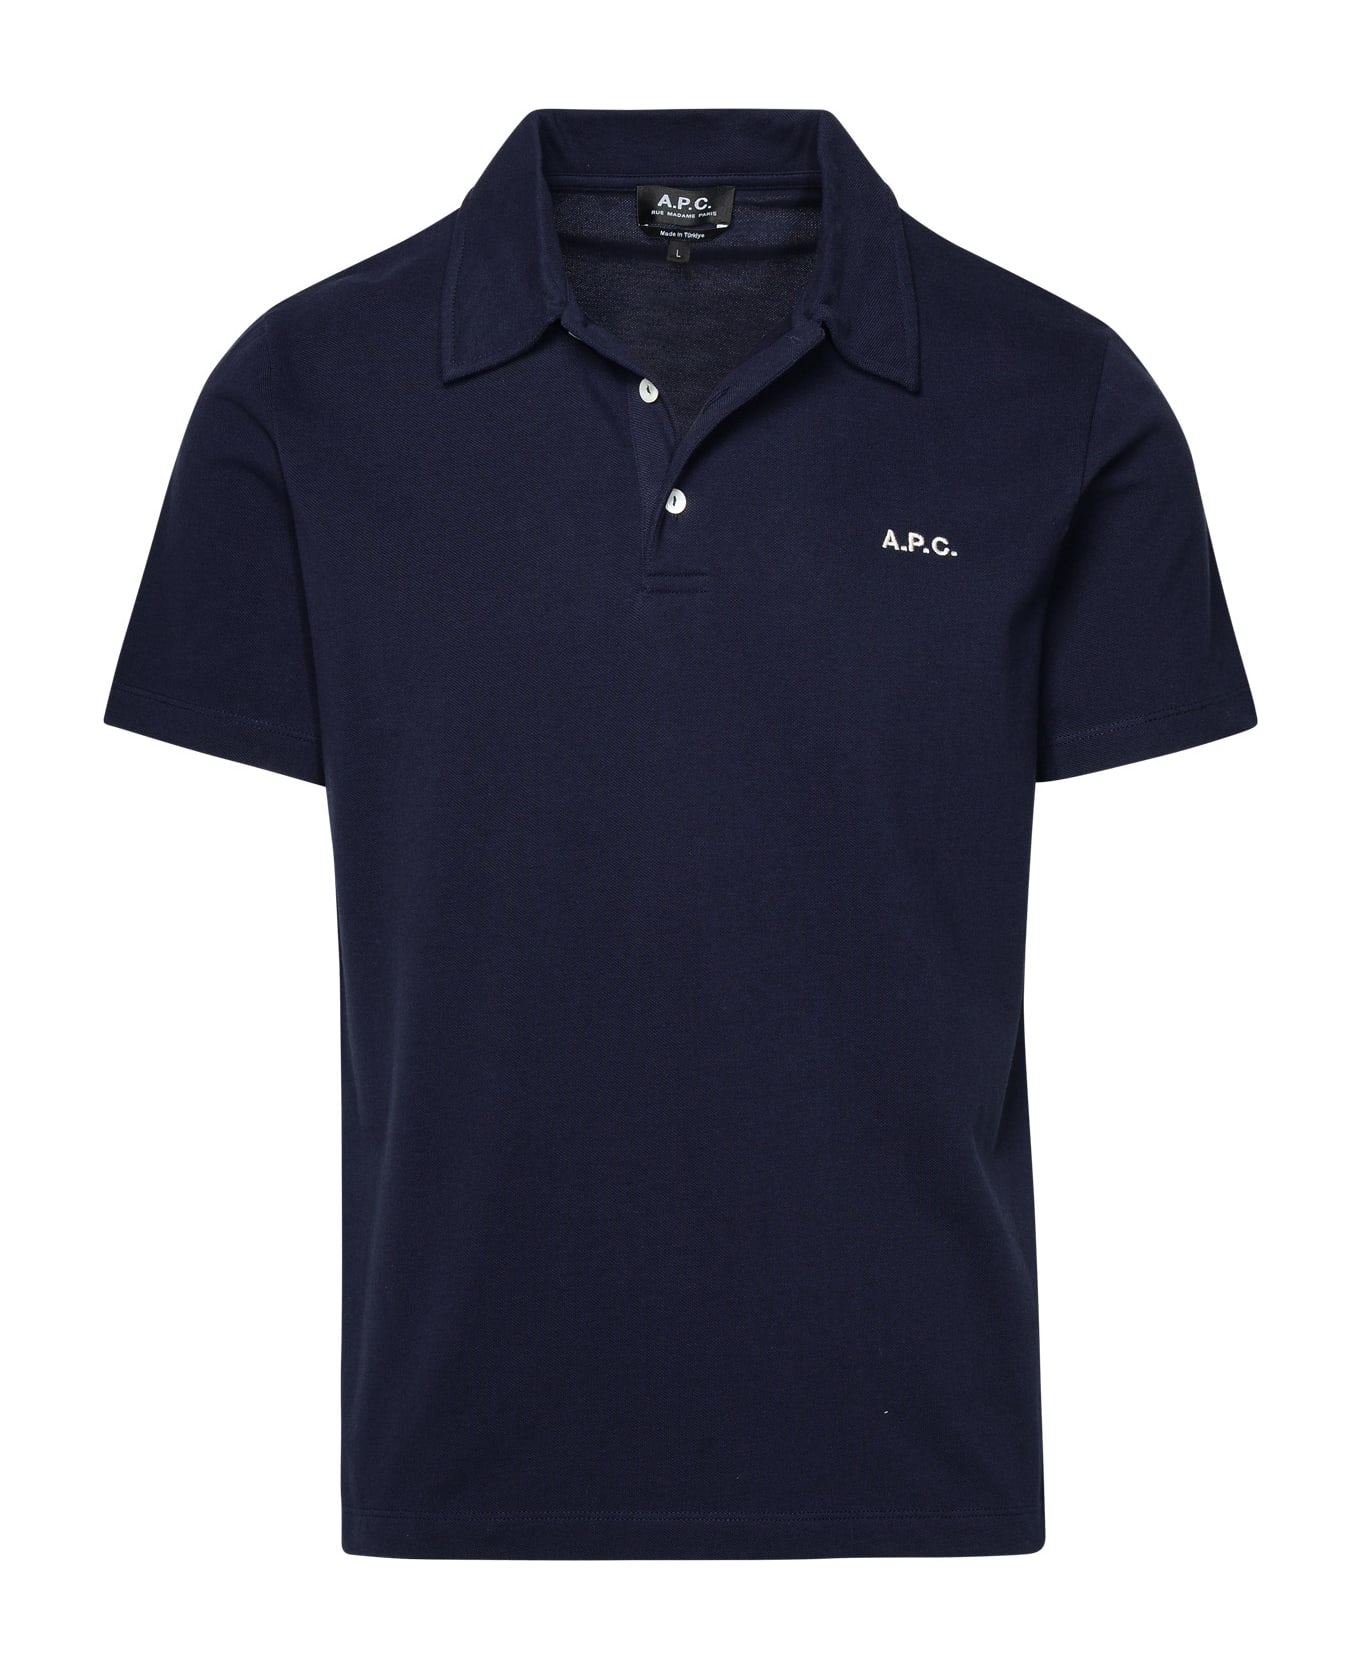 A.P.C. Polo Shirt In Blue Cotton - Navy